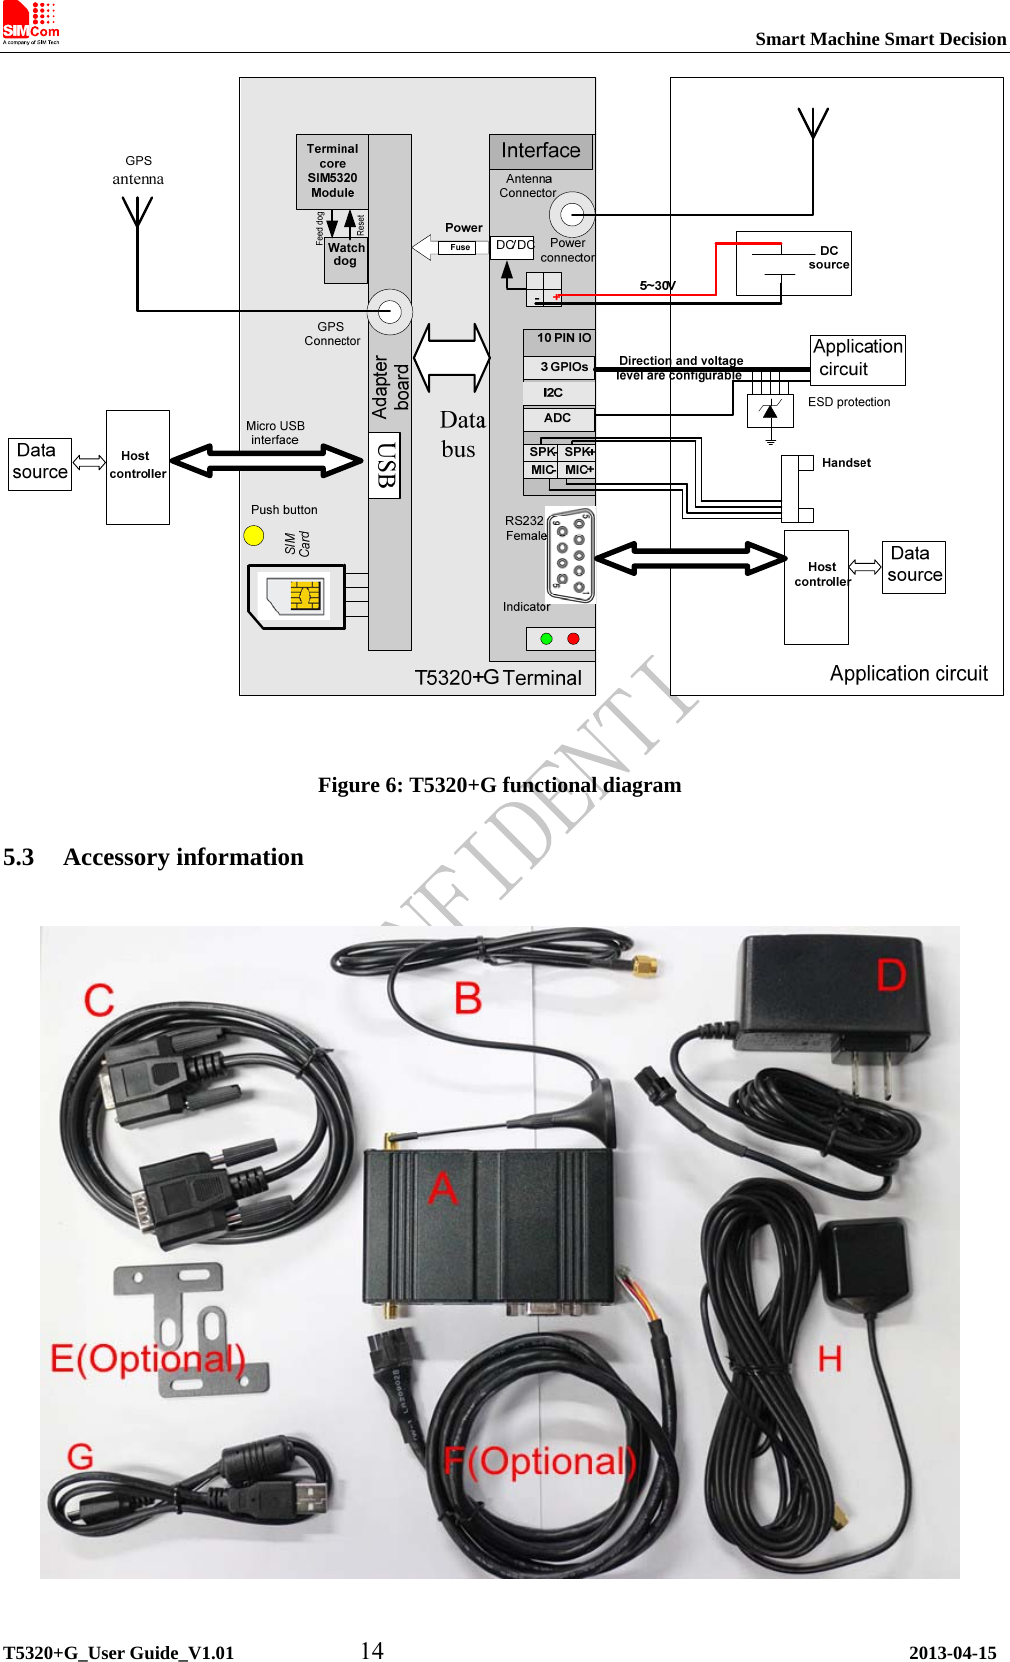                                                                           Smart Machine Smart Decision             T5320+G_User Guide_V1.01          14                                          2013-04-15   Figure 6: T5320+G functional diagram 5.3 Accessory information   